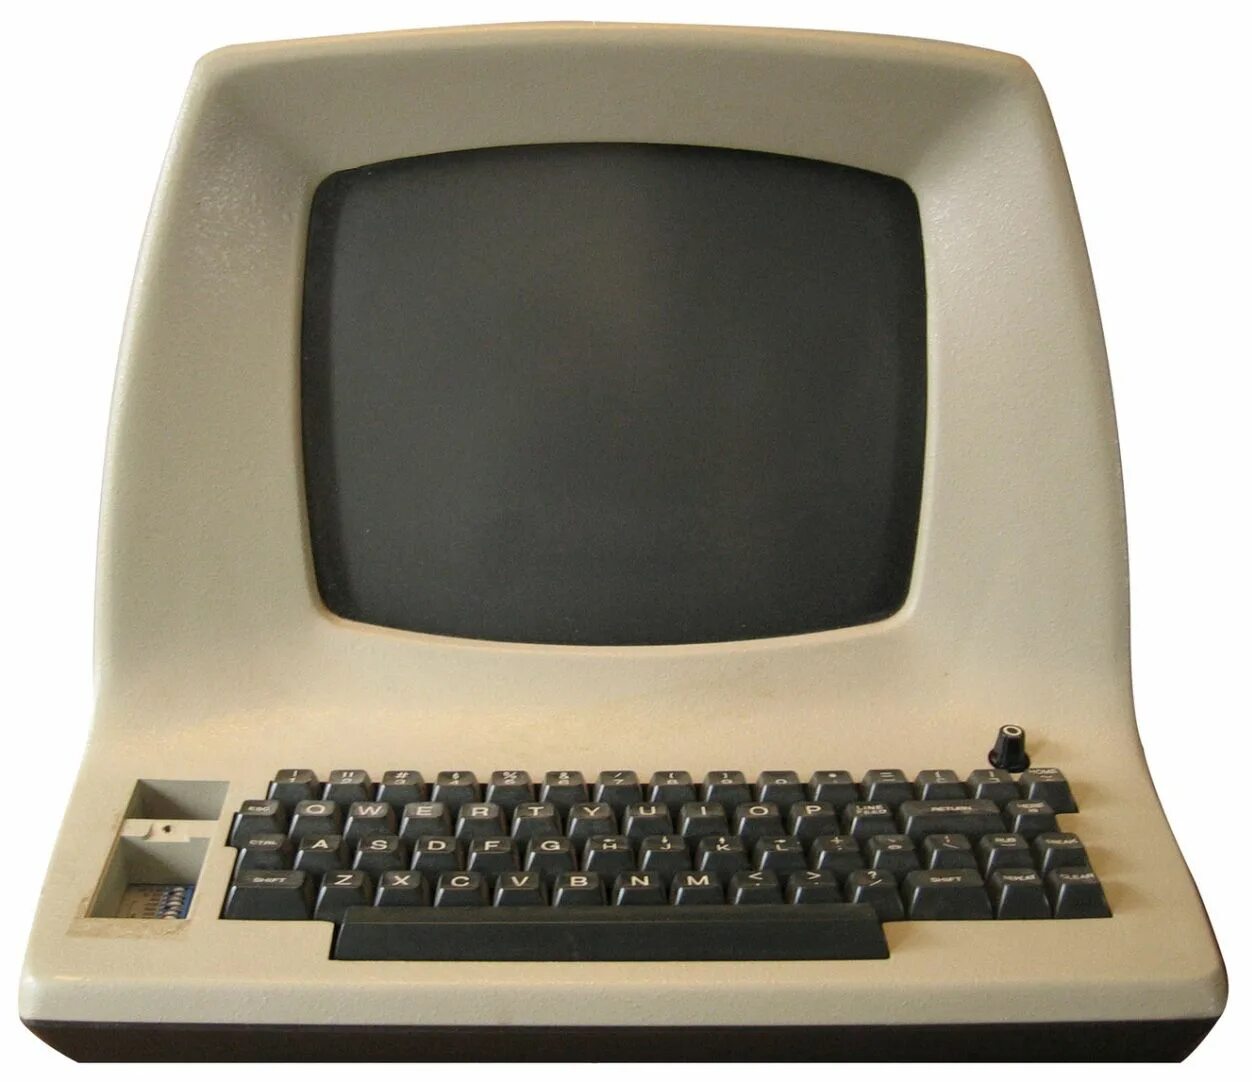 Старый компьютер. Монитор старого компьютера. Старинный компьютер. Самый старый компьютер. Sibm mouse